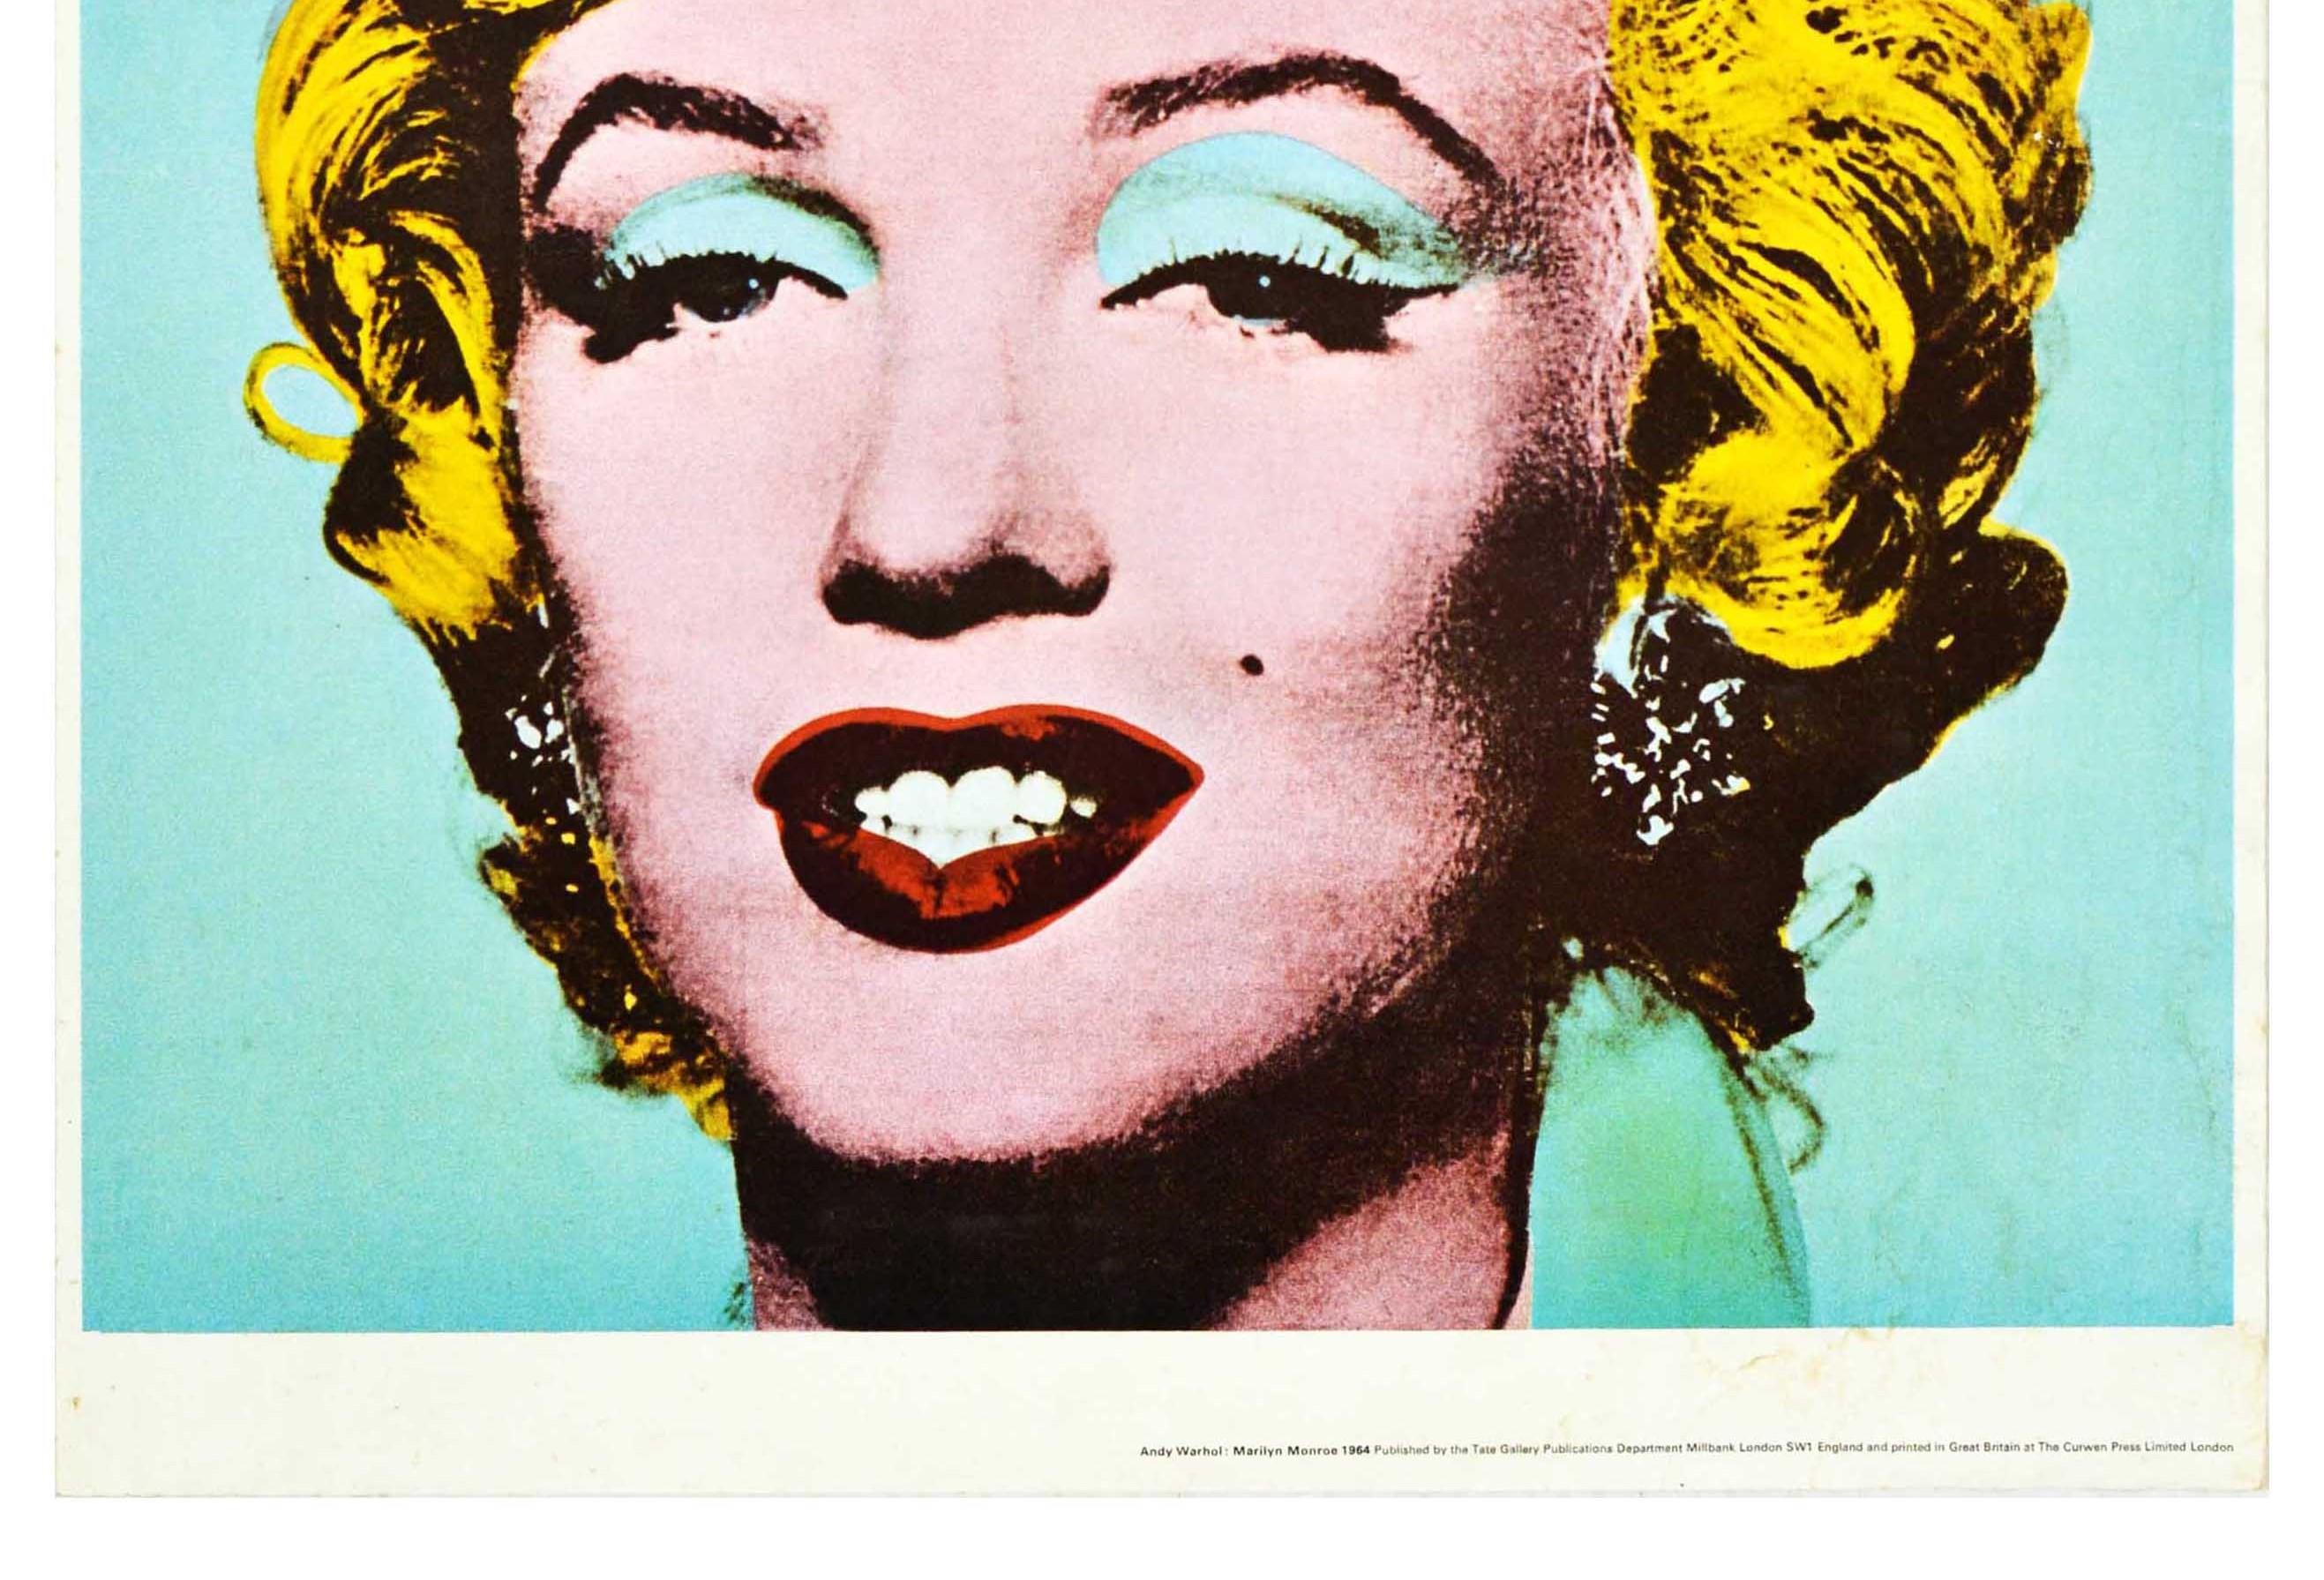 British Original Vintage Pop Art Exhibition Poster Warhol Marilyn Monroe Tate Gallery